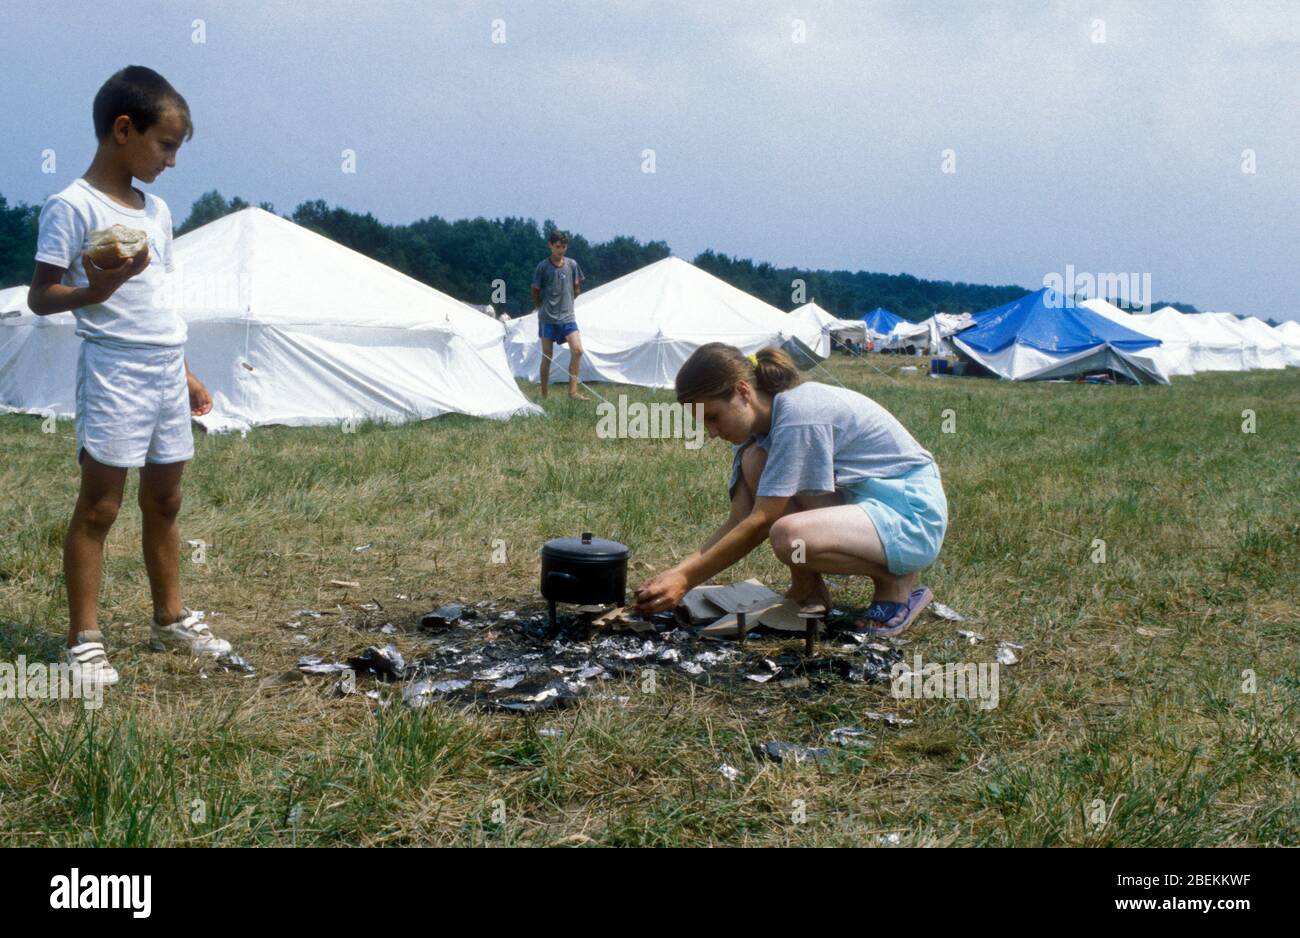 1995 - Tuzla airfield temporary UN refugee camp for Bosnian Muslims fleeing the Srebrenica Massacre during the Bosnian war. Children setting up cooking facilities using wood Stock Photo